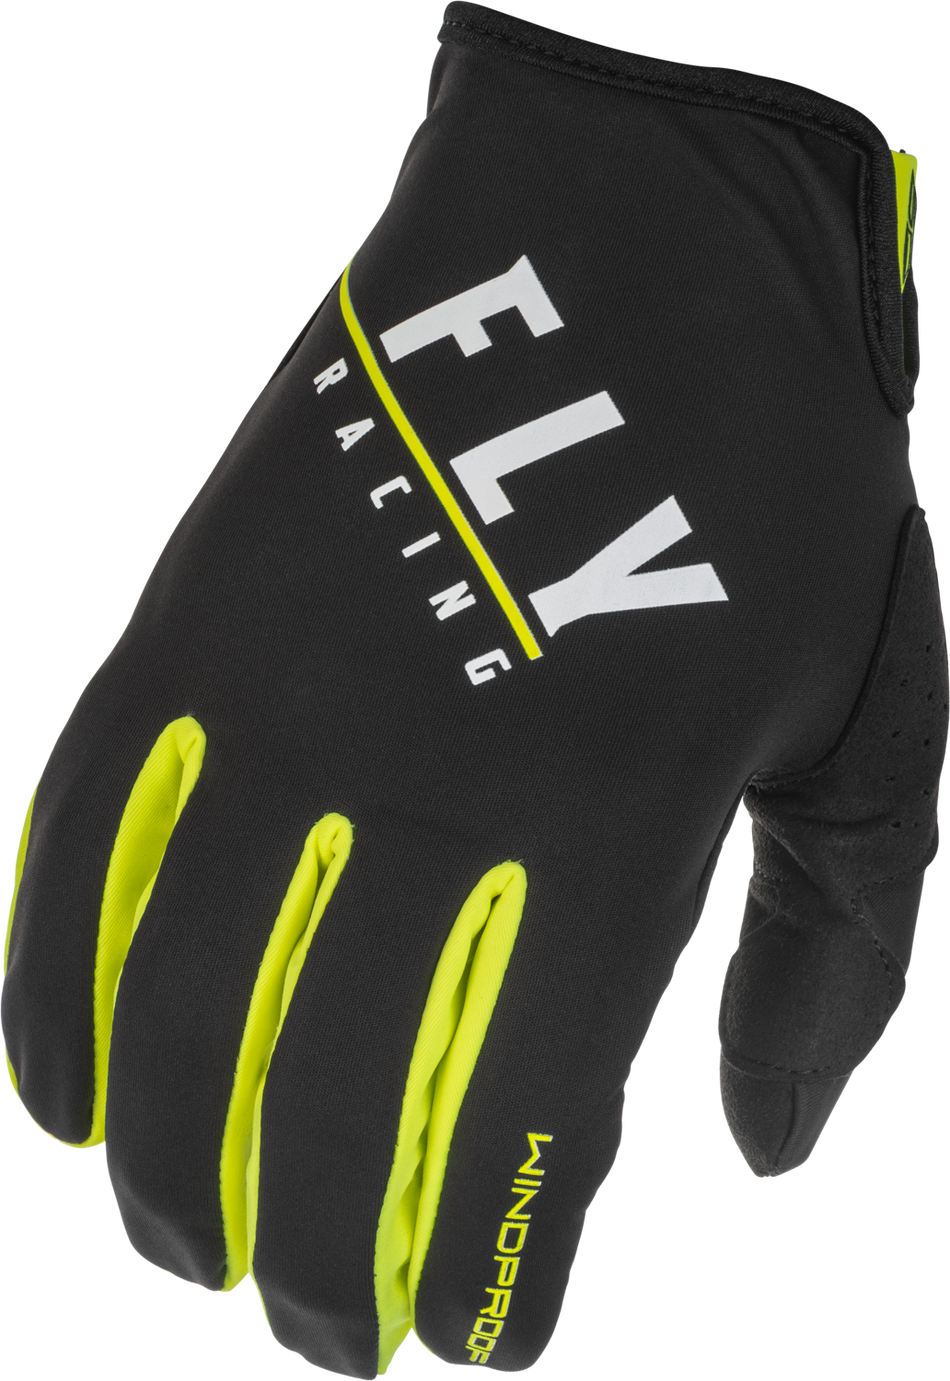 FLY RACING Windproof Gloves Black/Hi-Vis Sz 11 371-14211